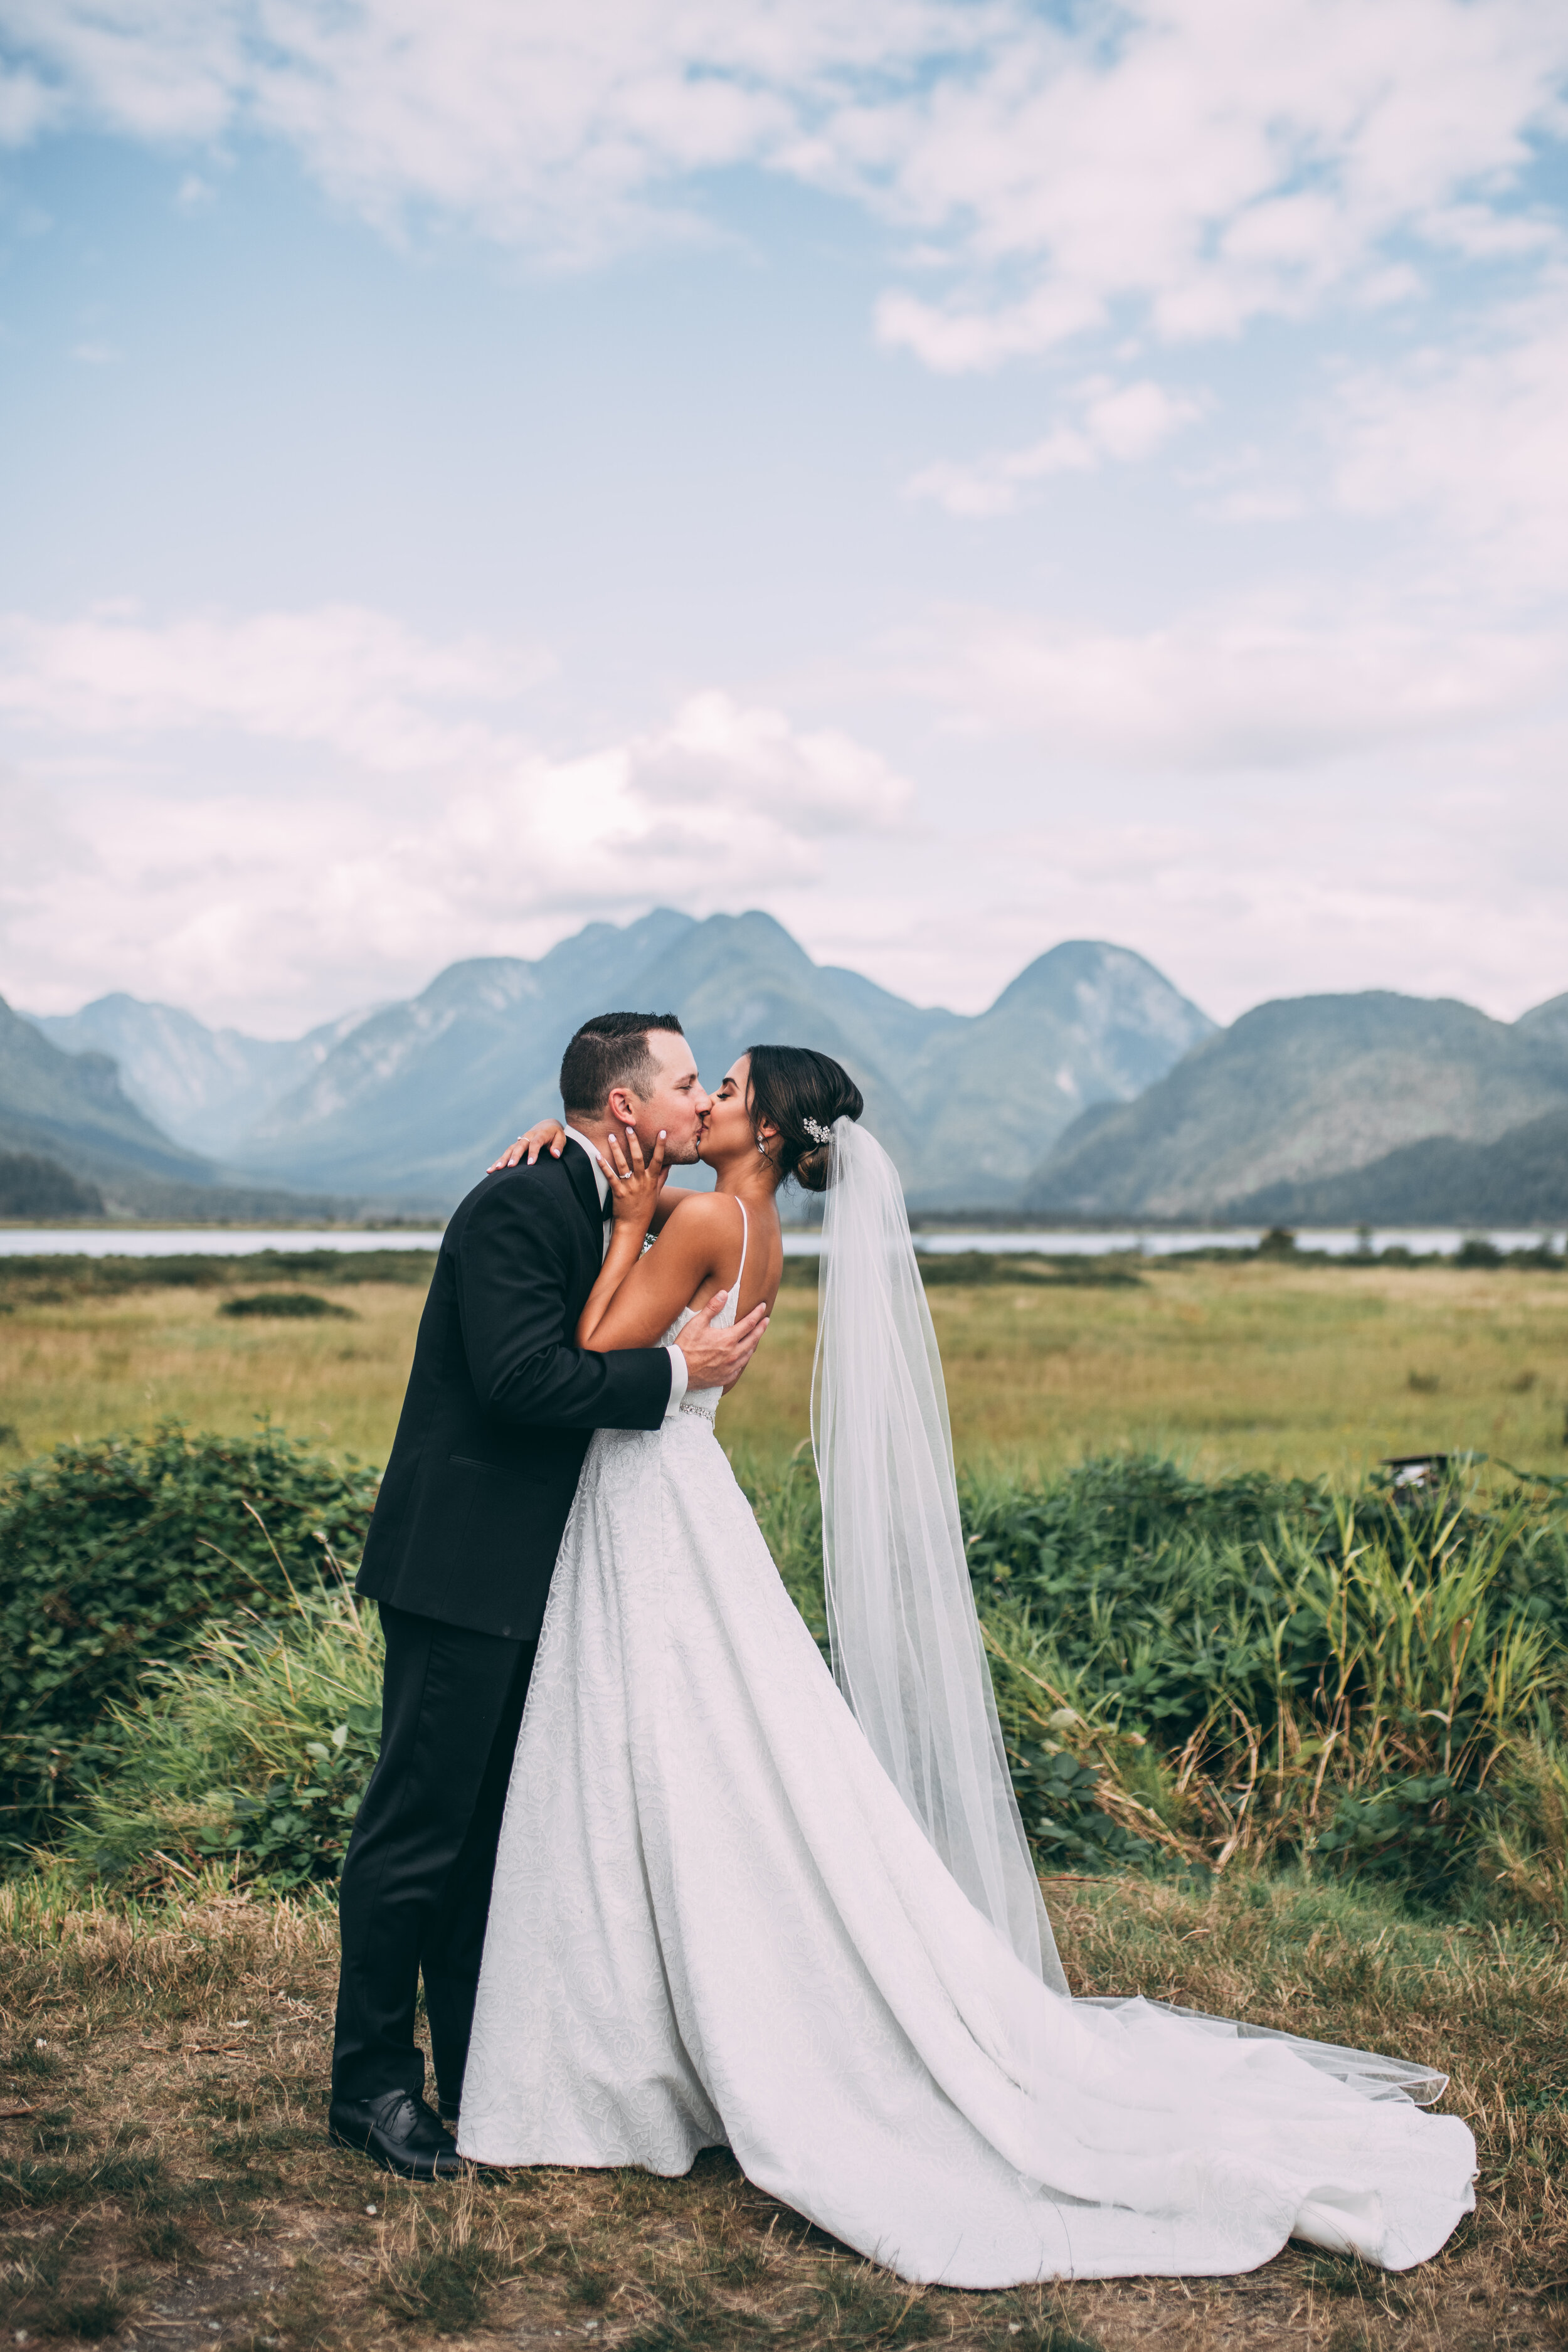 Natasha & Lee Sneak Peeks - August 31, 2019 Swaneset Wedding-1094.jpg